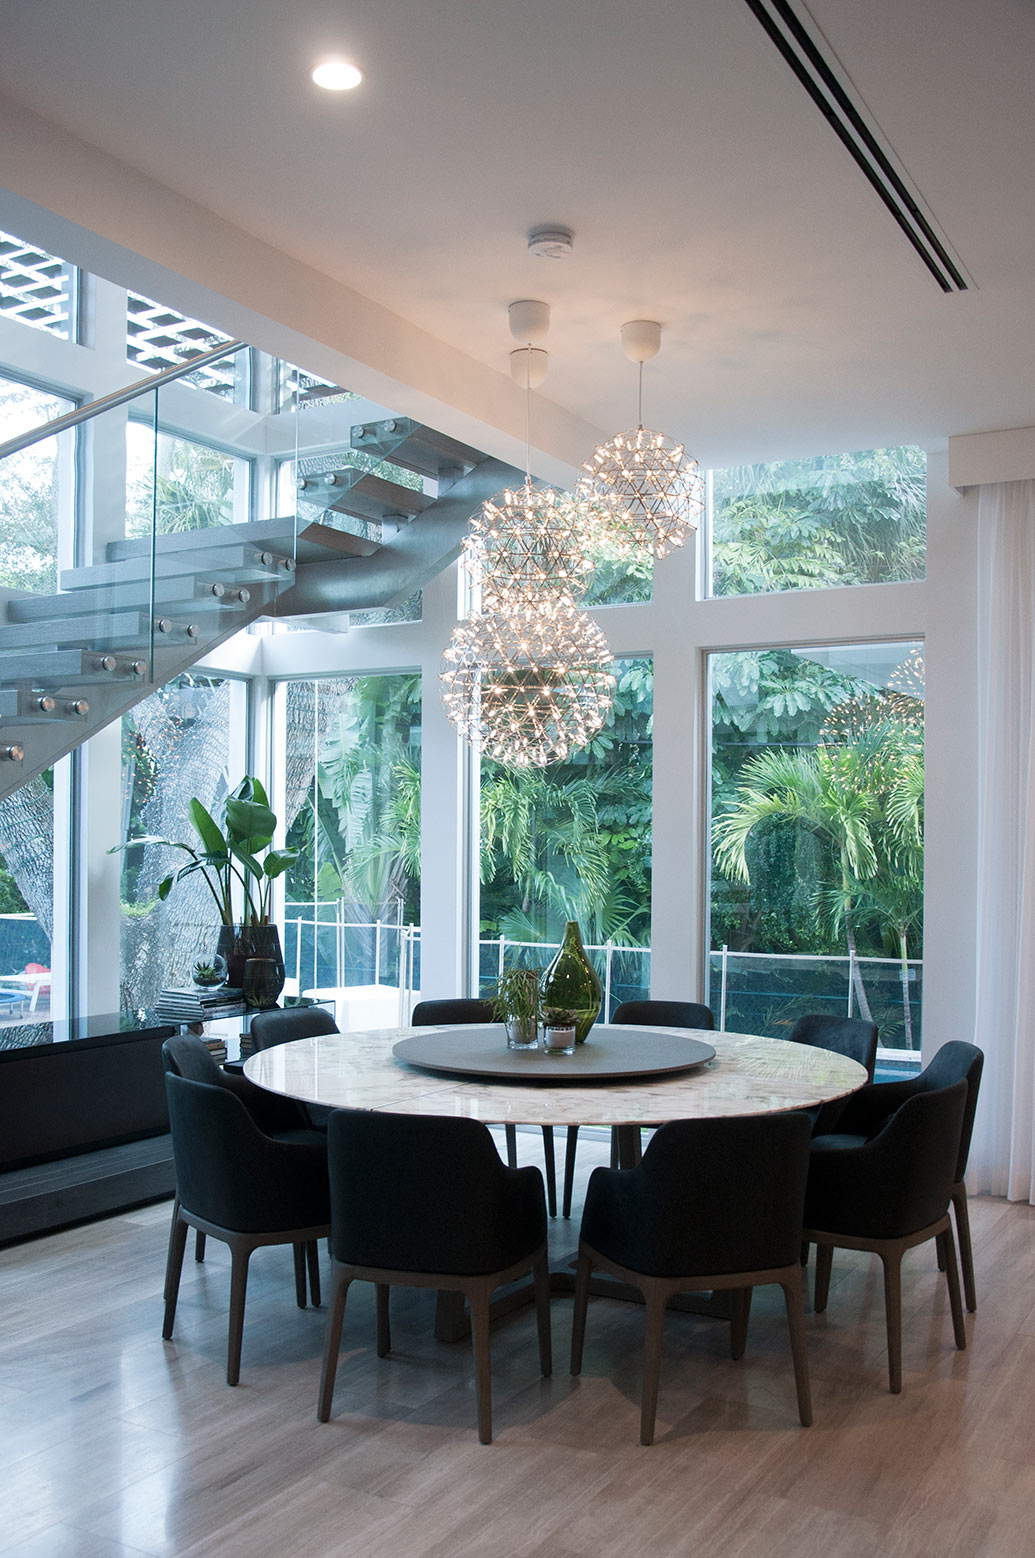 Key Biscayne Interior Design - Furniture & Lighting Selections